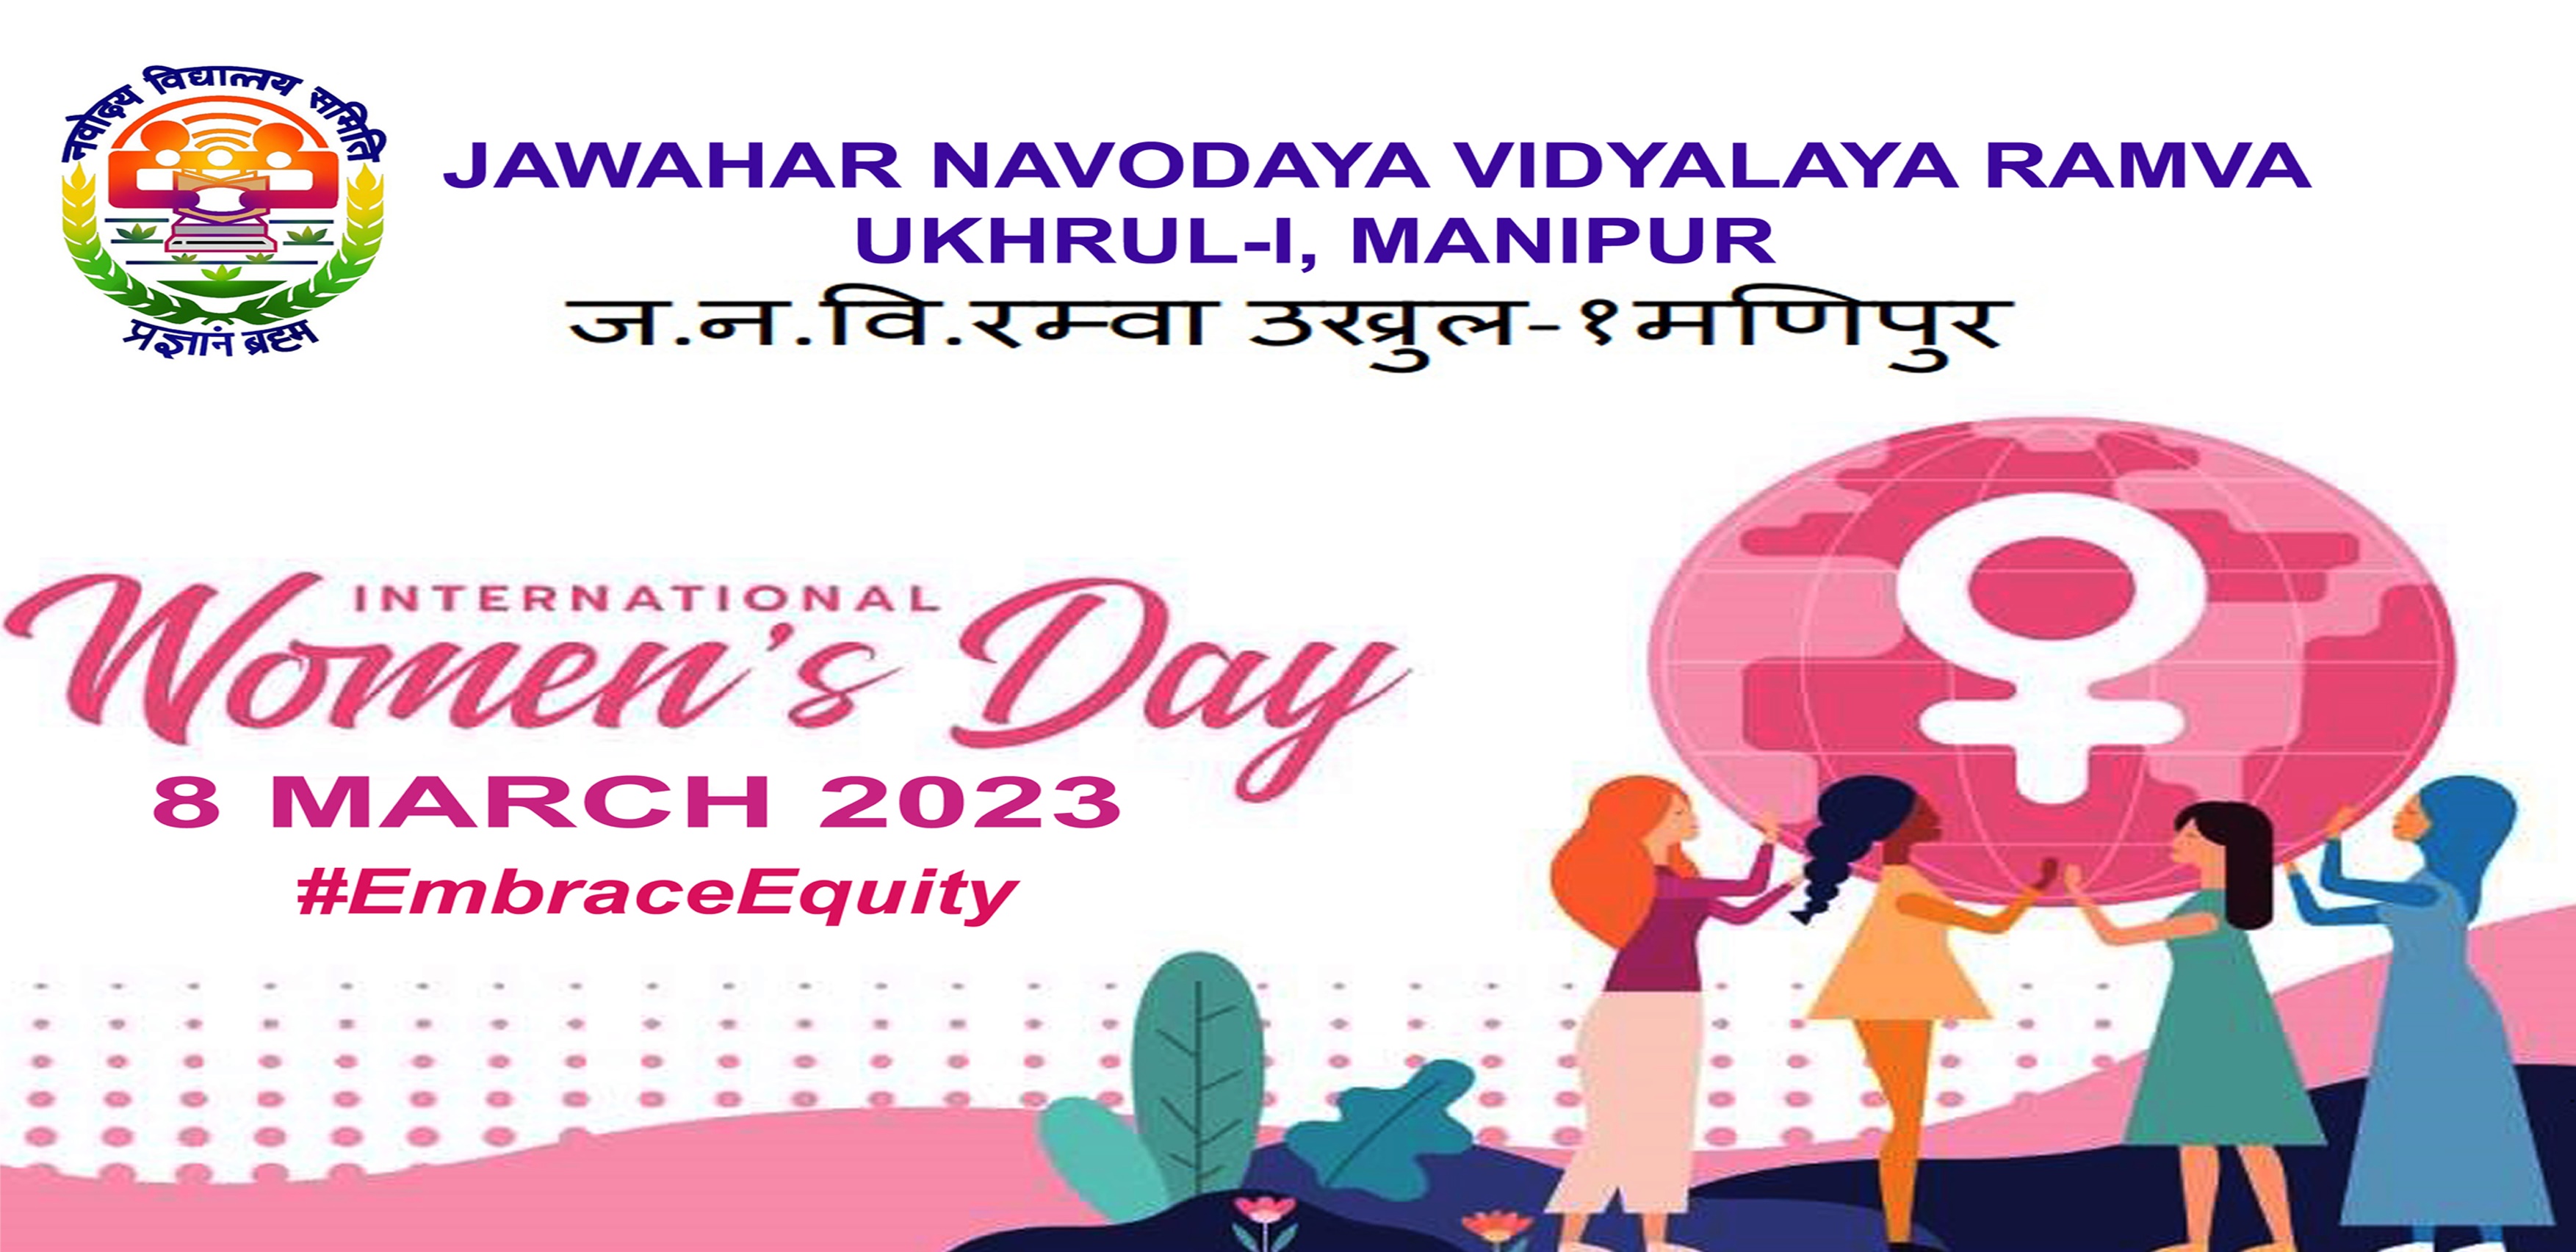 अंतरराष्ट्रीय महिला दिवस